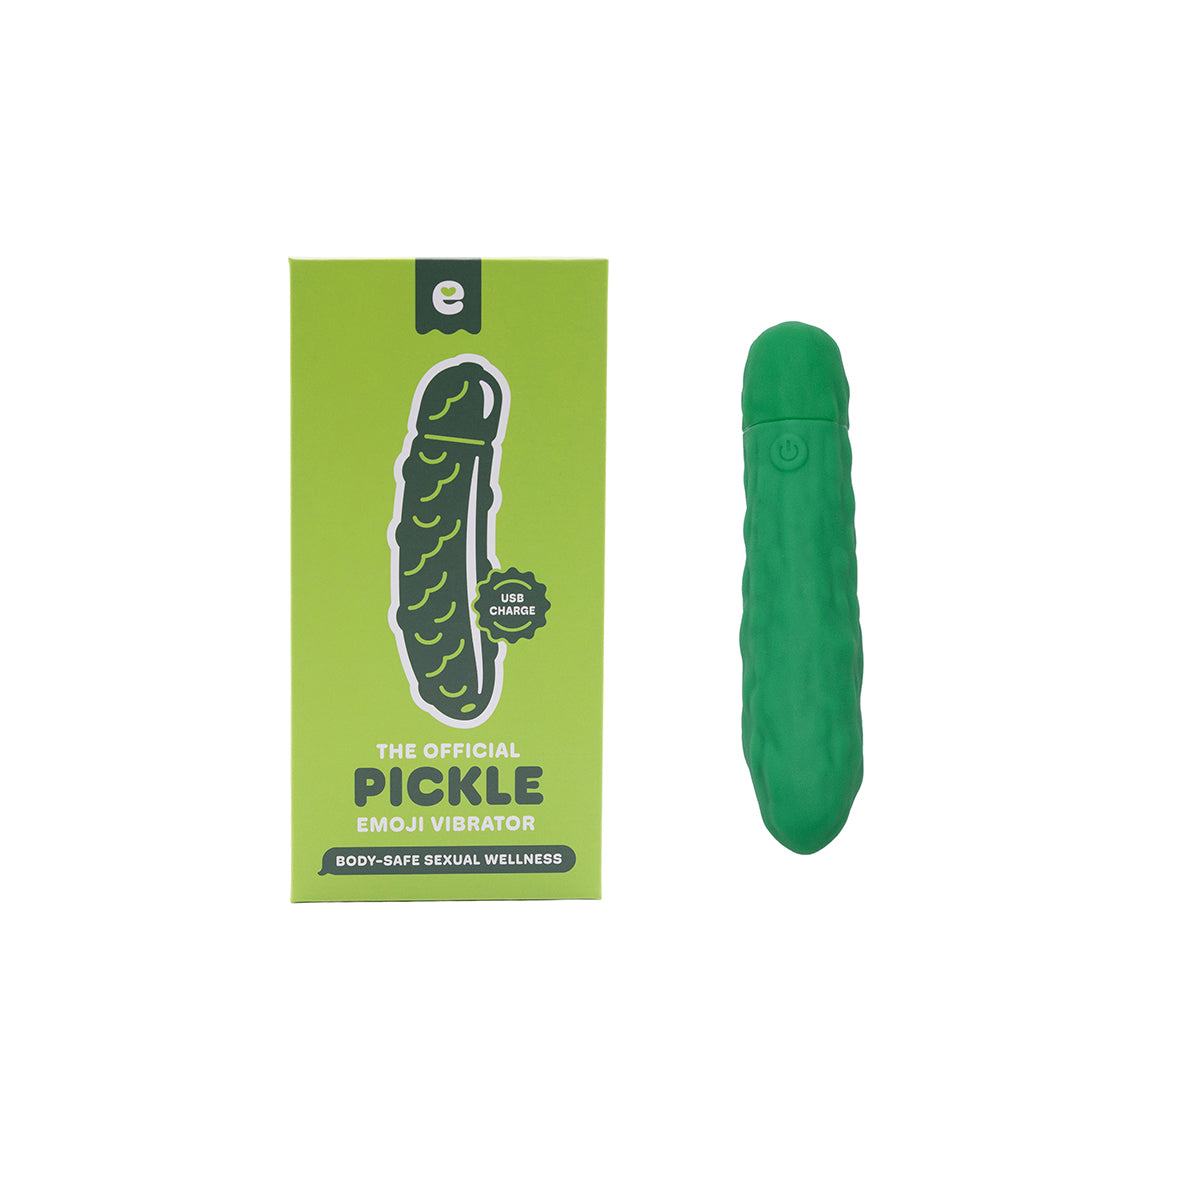 Emojibator Pickle USB